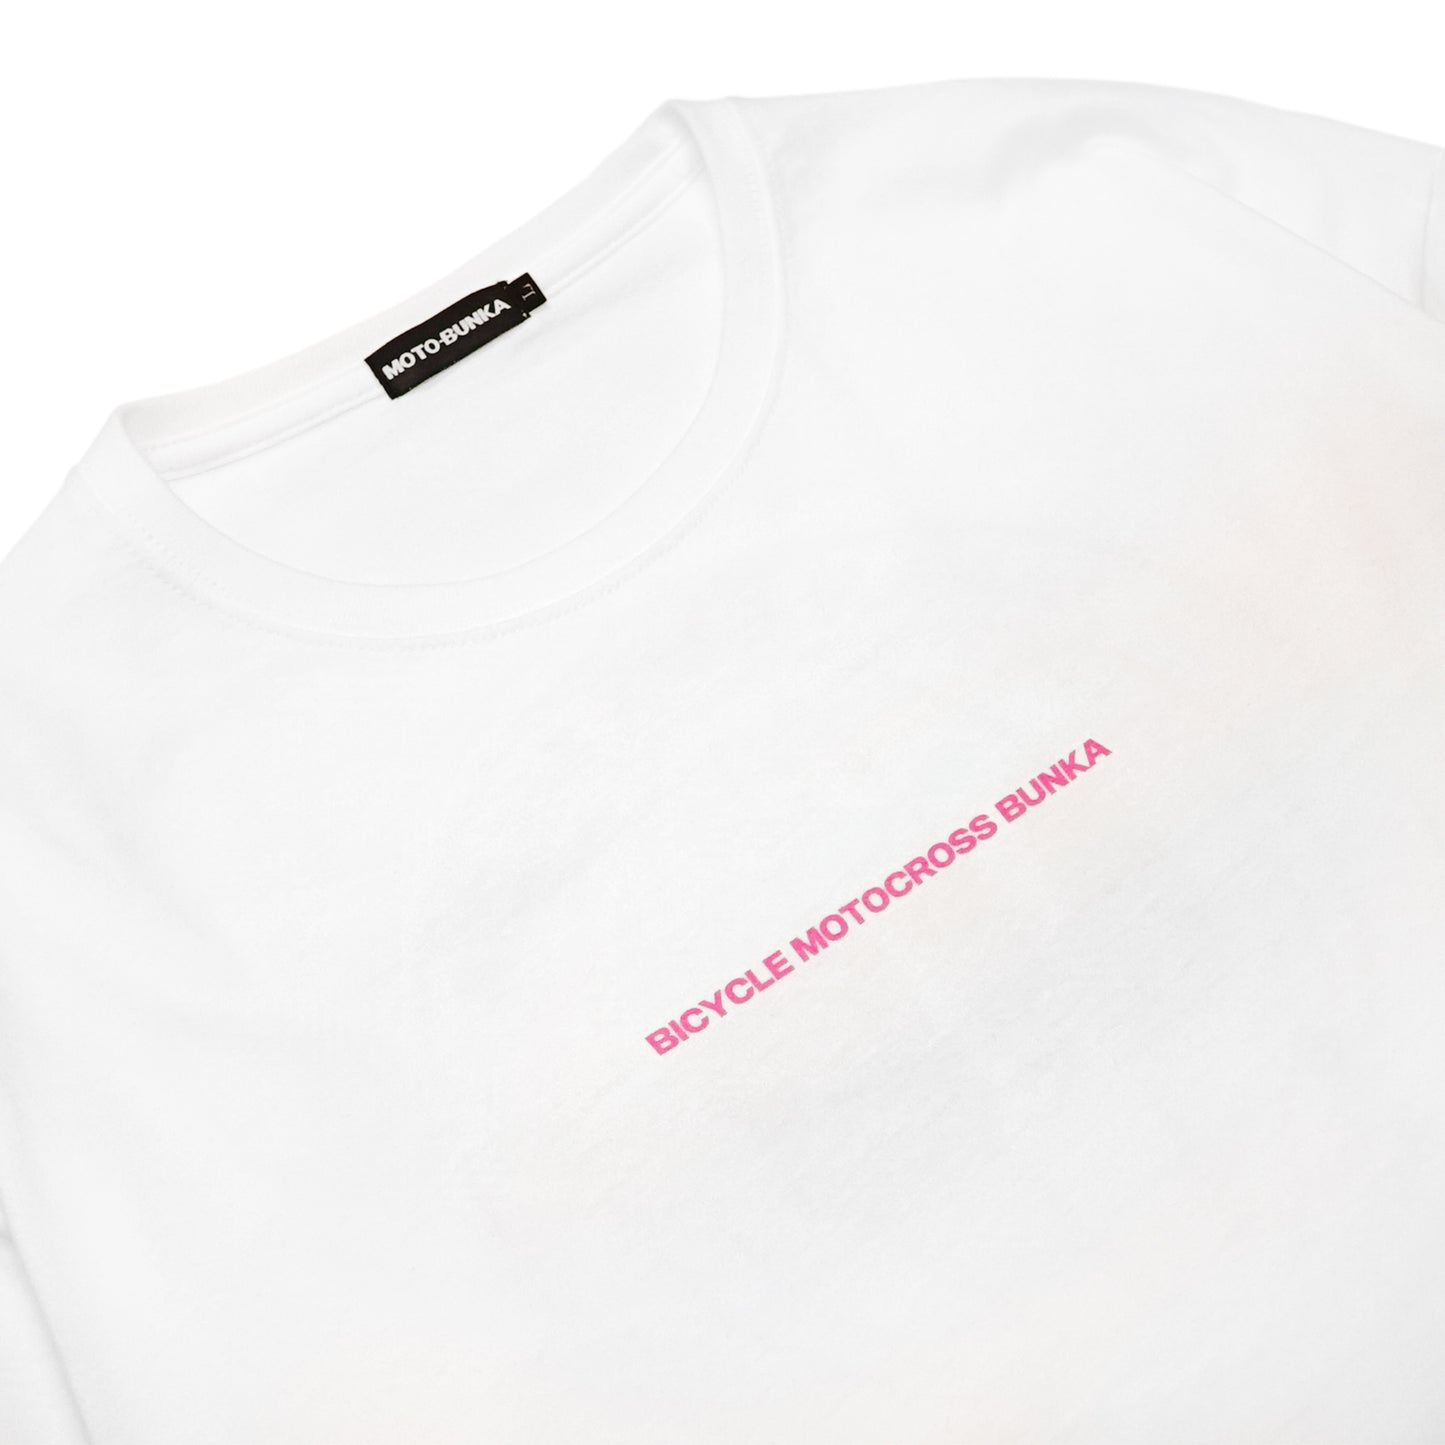 MOTO-BUNKA - JBM 22 T-Shirt/White-Pink